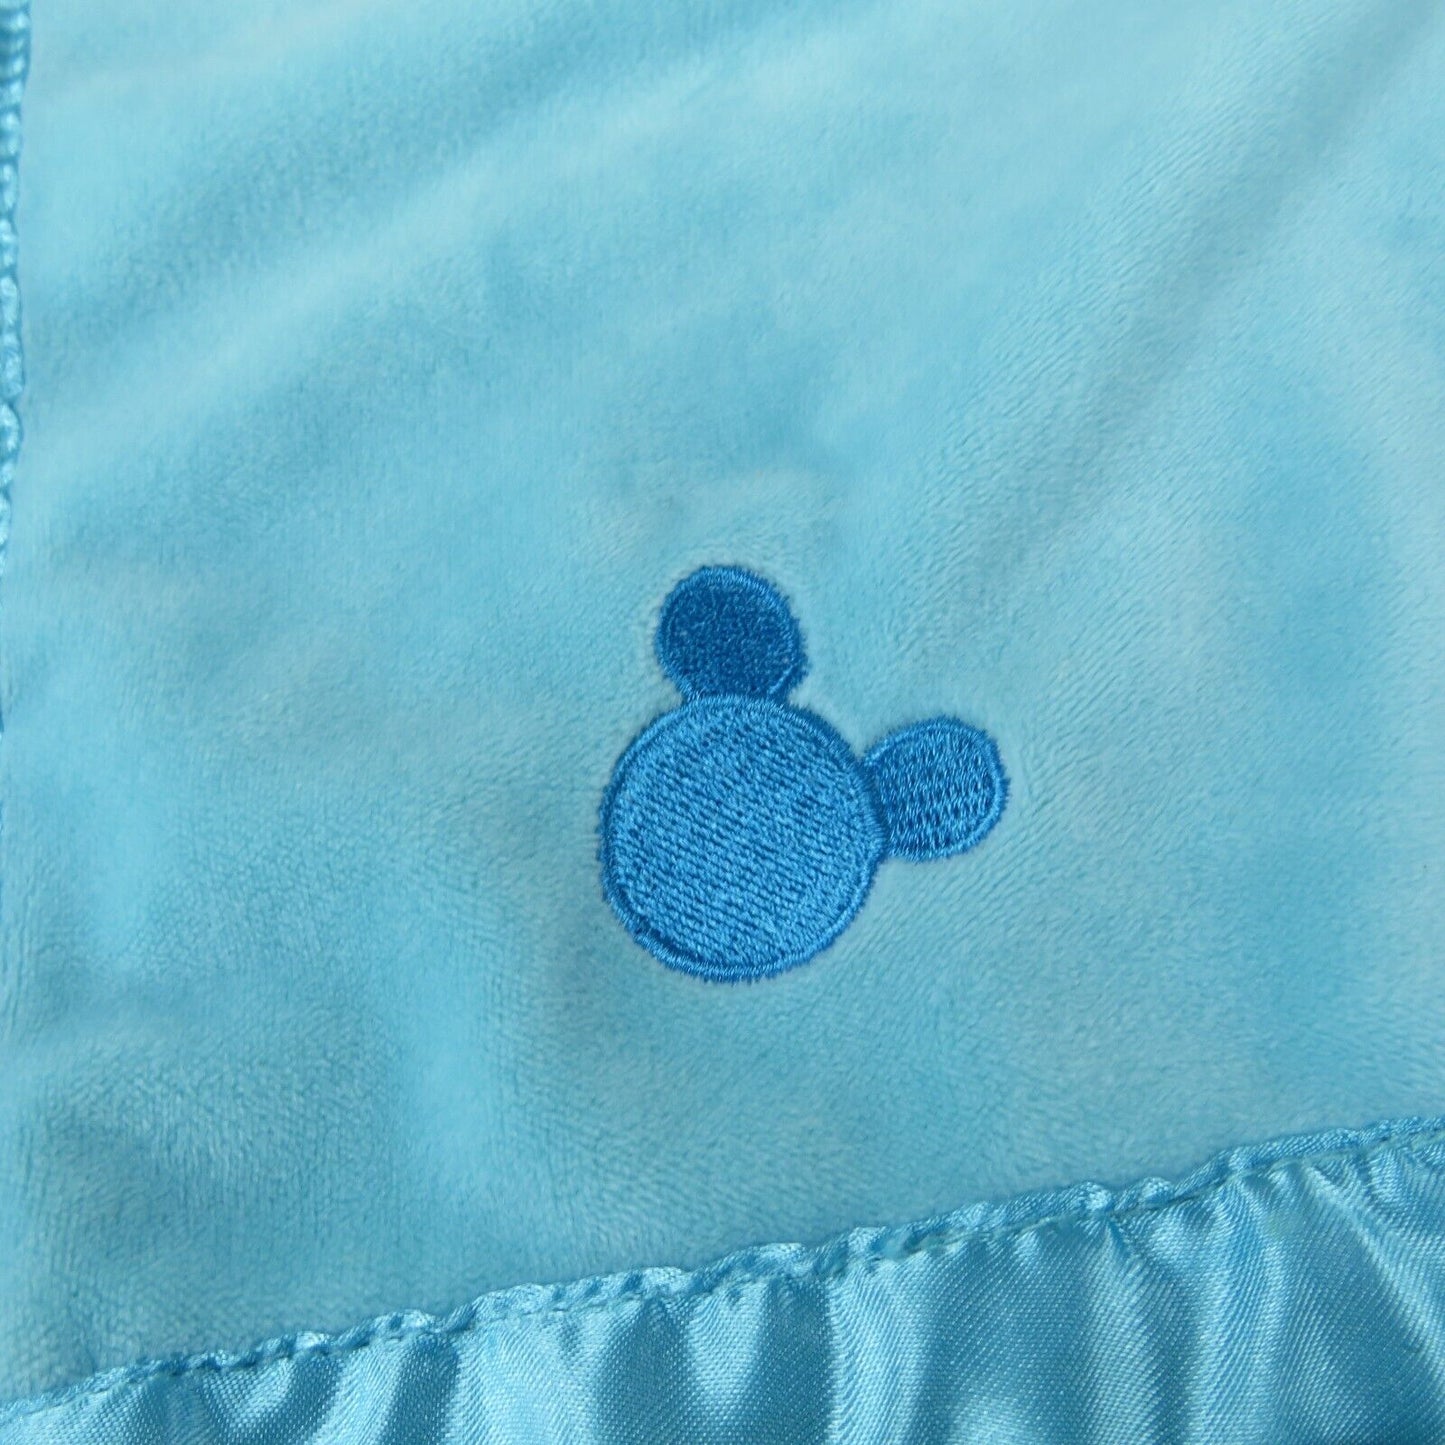 Disney Baby Mickey Mouse Plush Blue Satin Security Blanket Lovey Lovie Stuffed